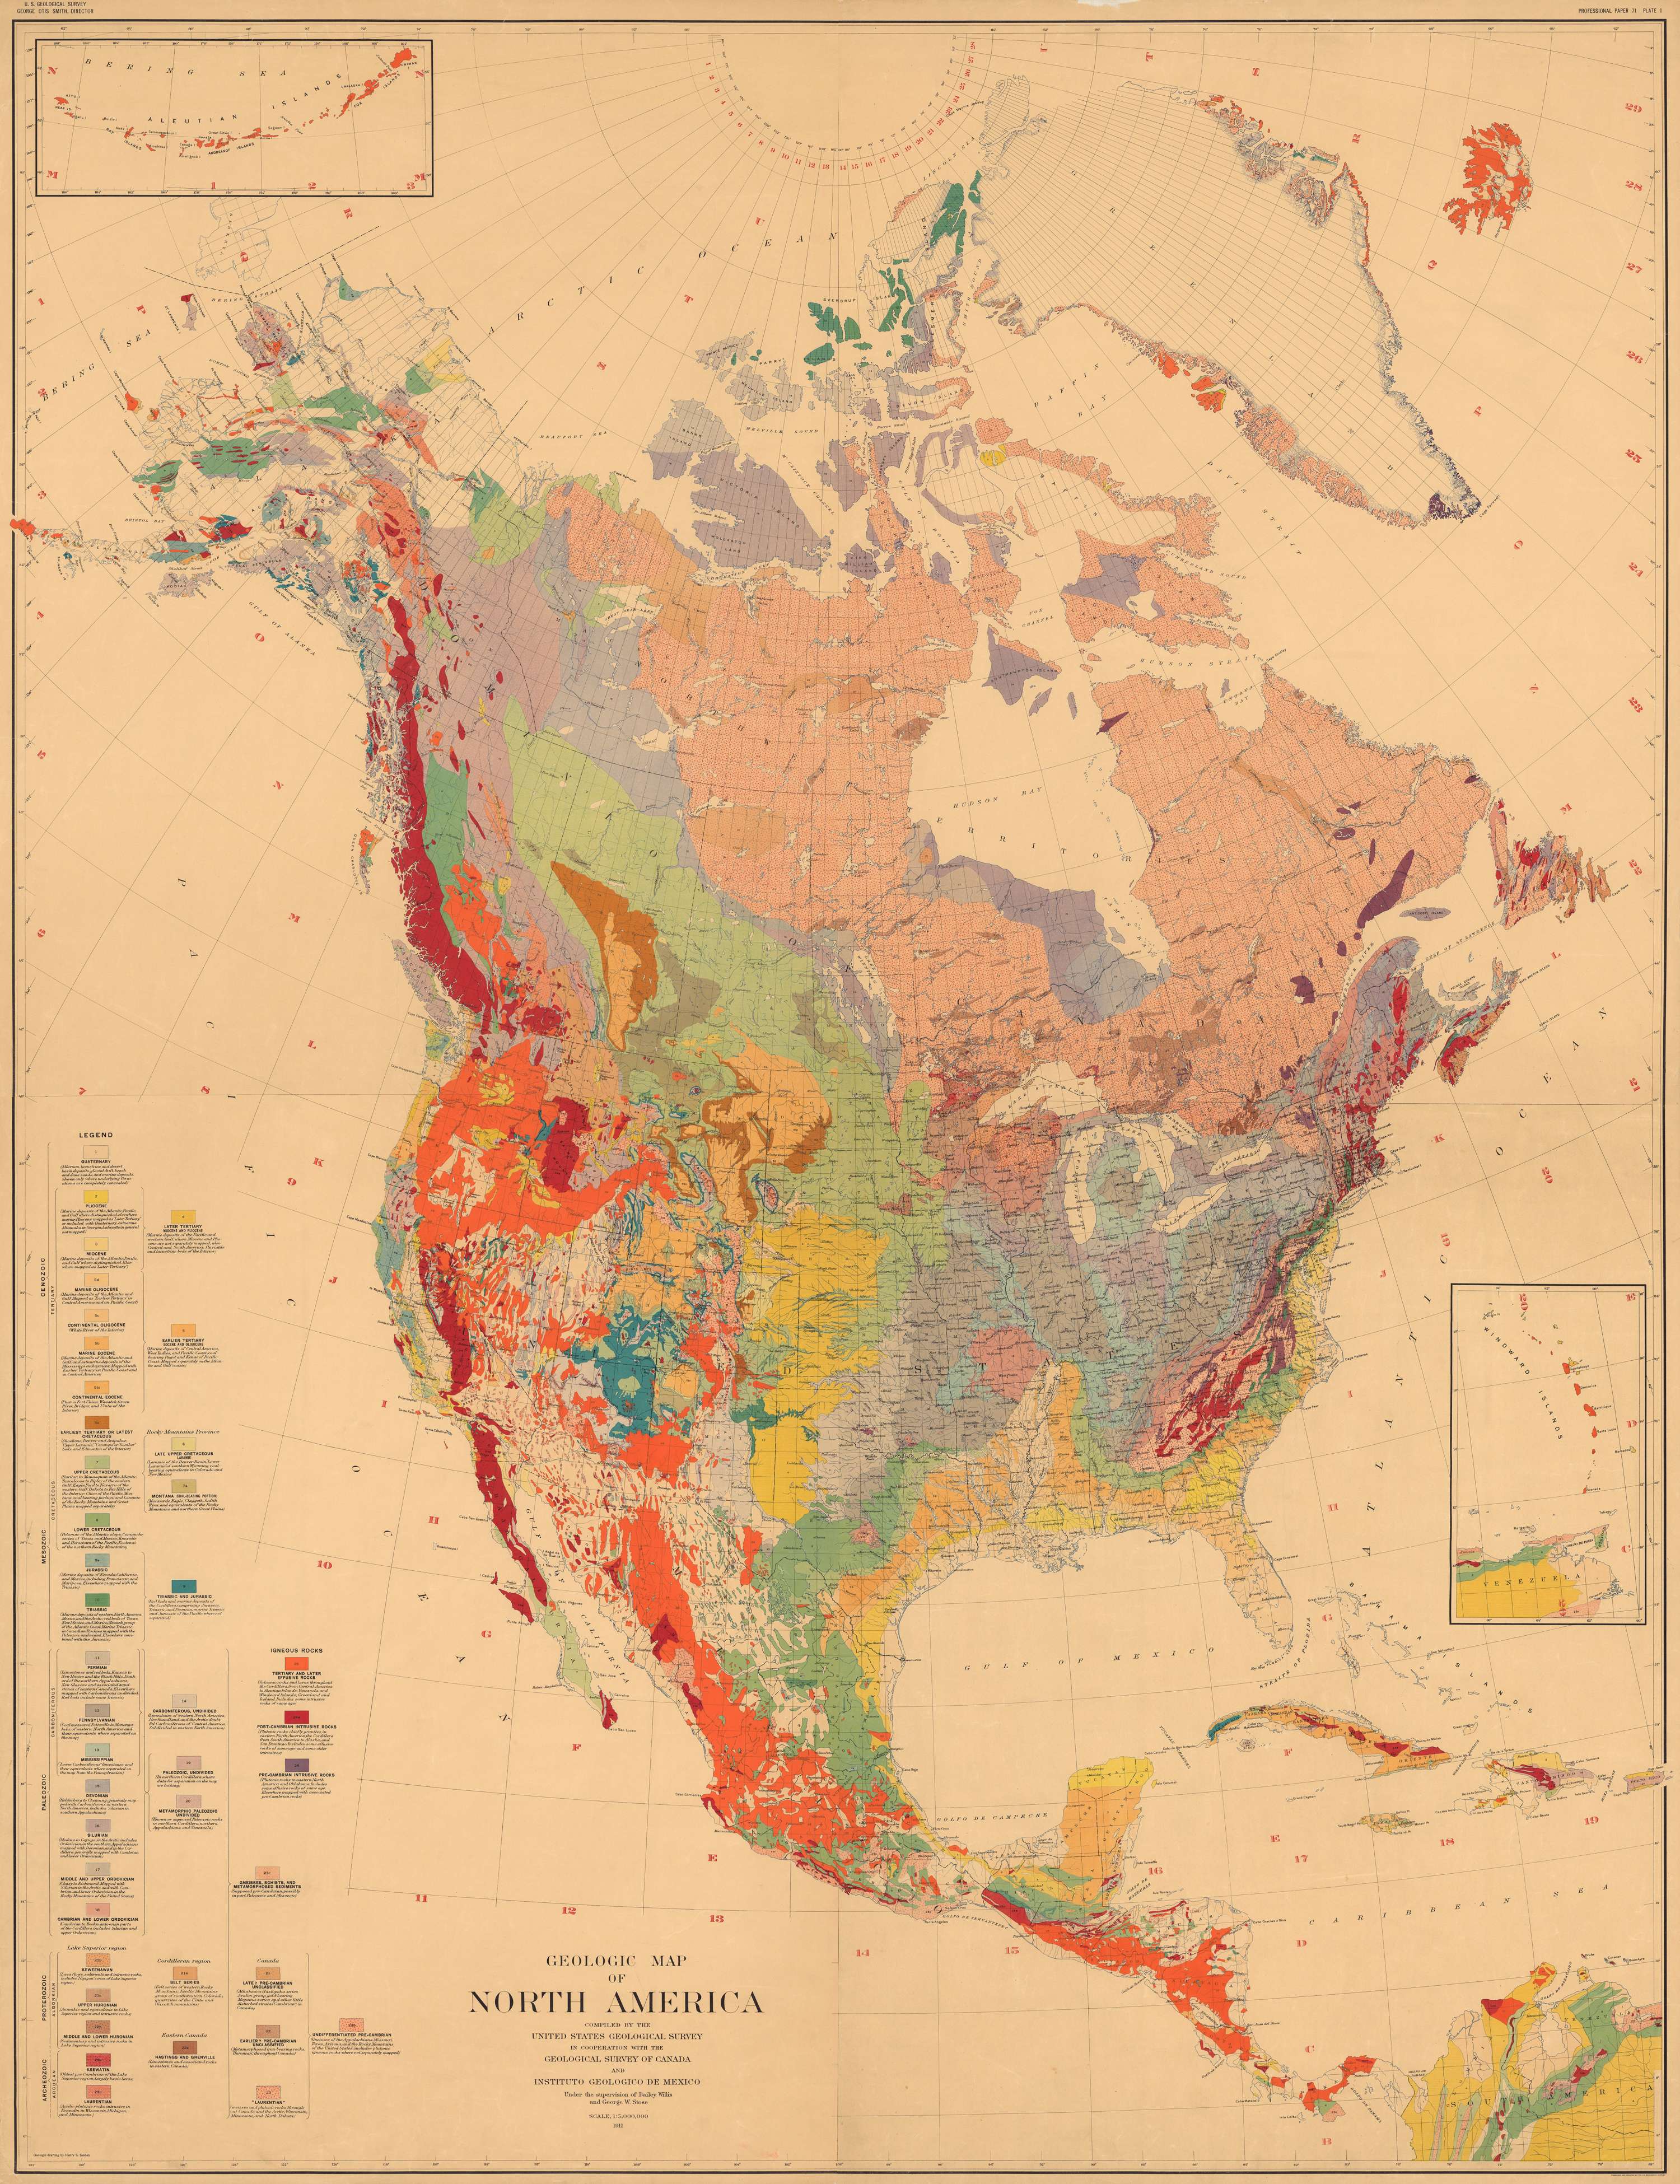 Geologic Map of North America